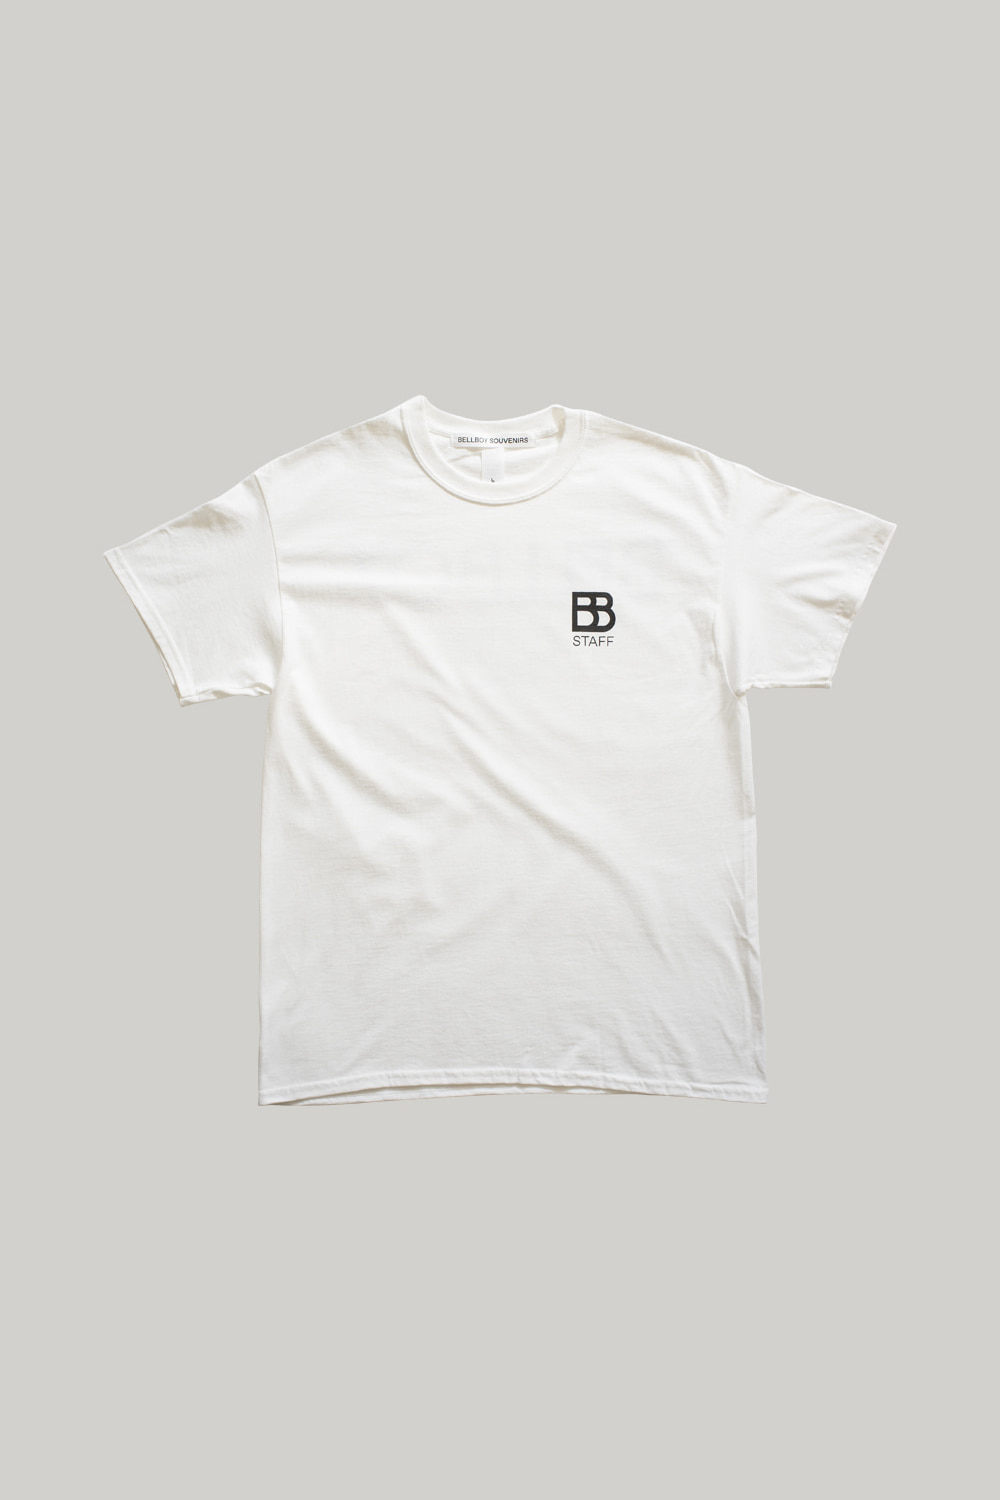 BELLBOY Staff T-Shirts - White 티셔츠, 워시드 헤비웨이트 티셔츠, 옥스포드셔츠, 버튼다운셔츠, 메신저백, 캔버스백